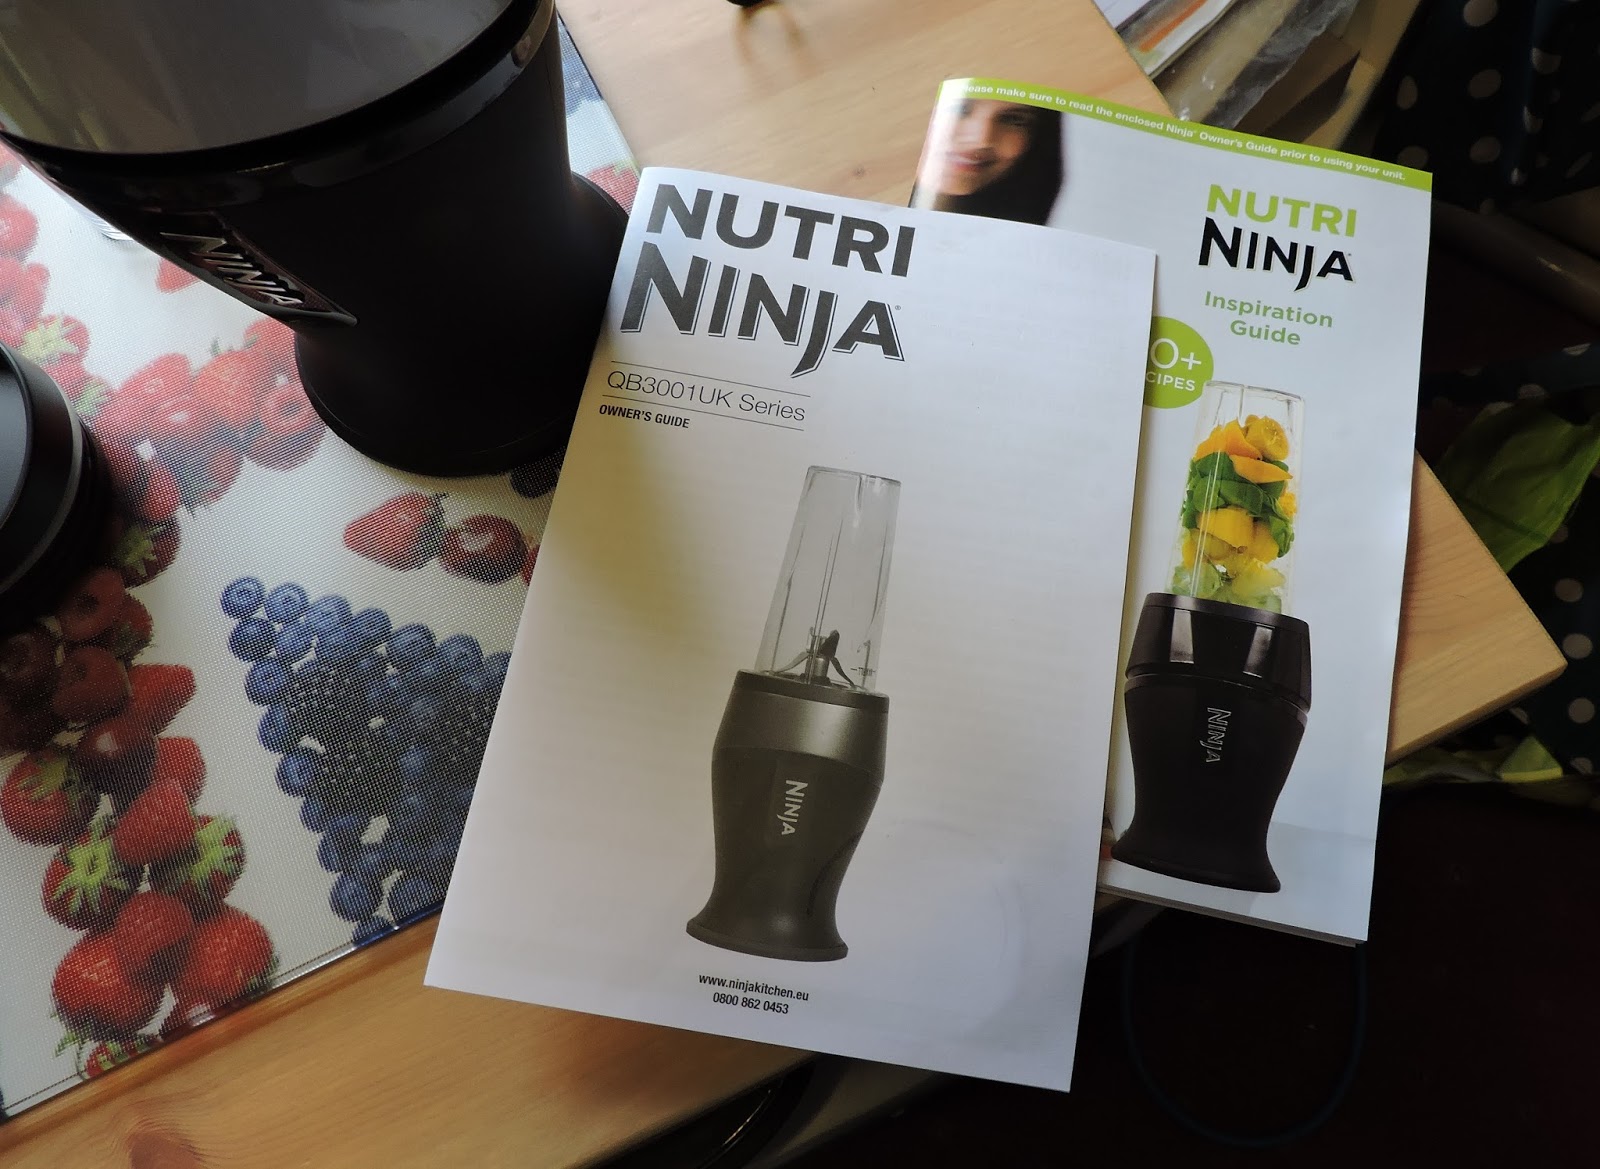 The Nutri Ninja Smoothie Maker